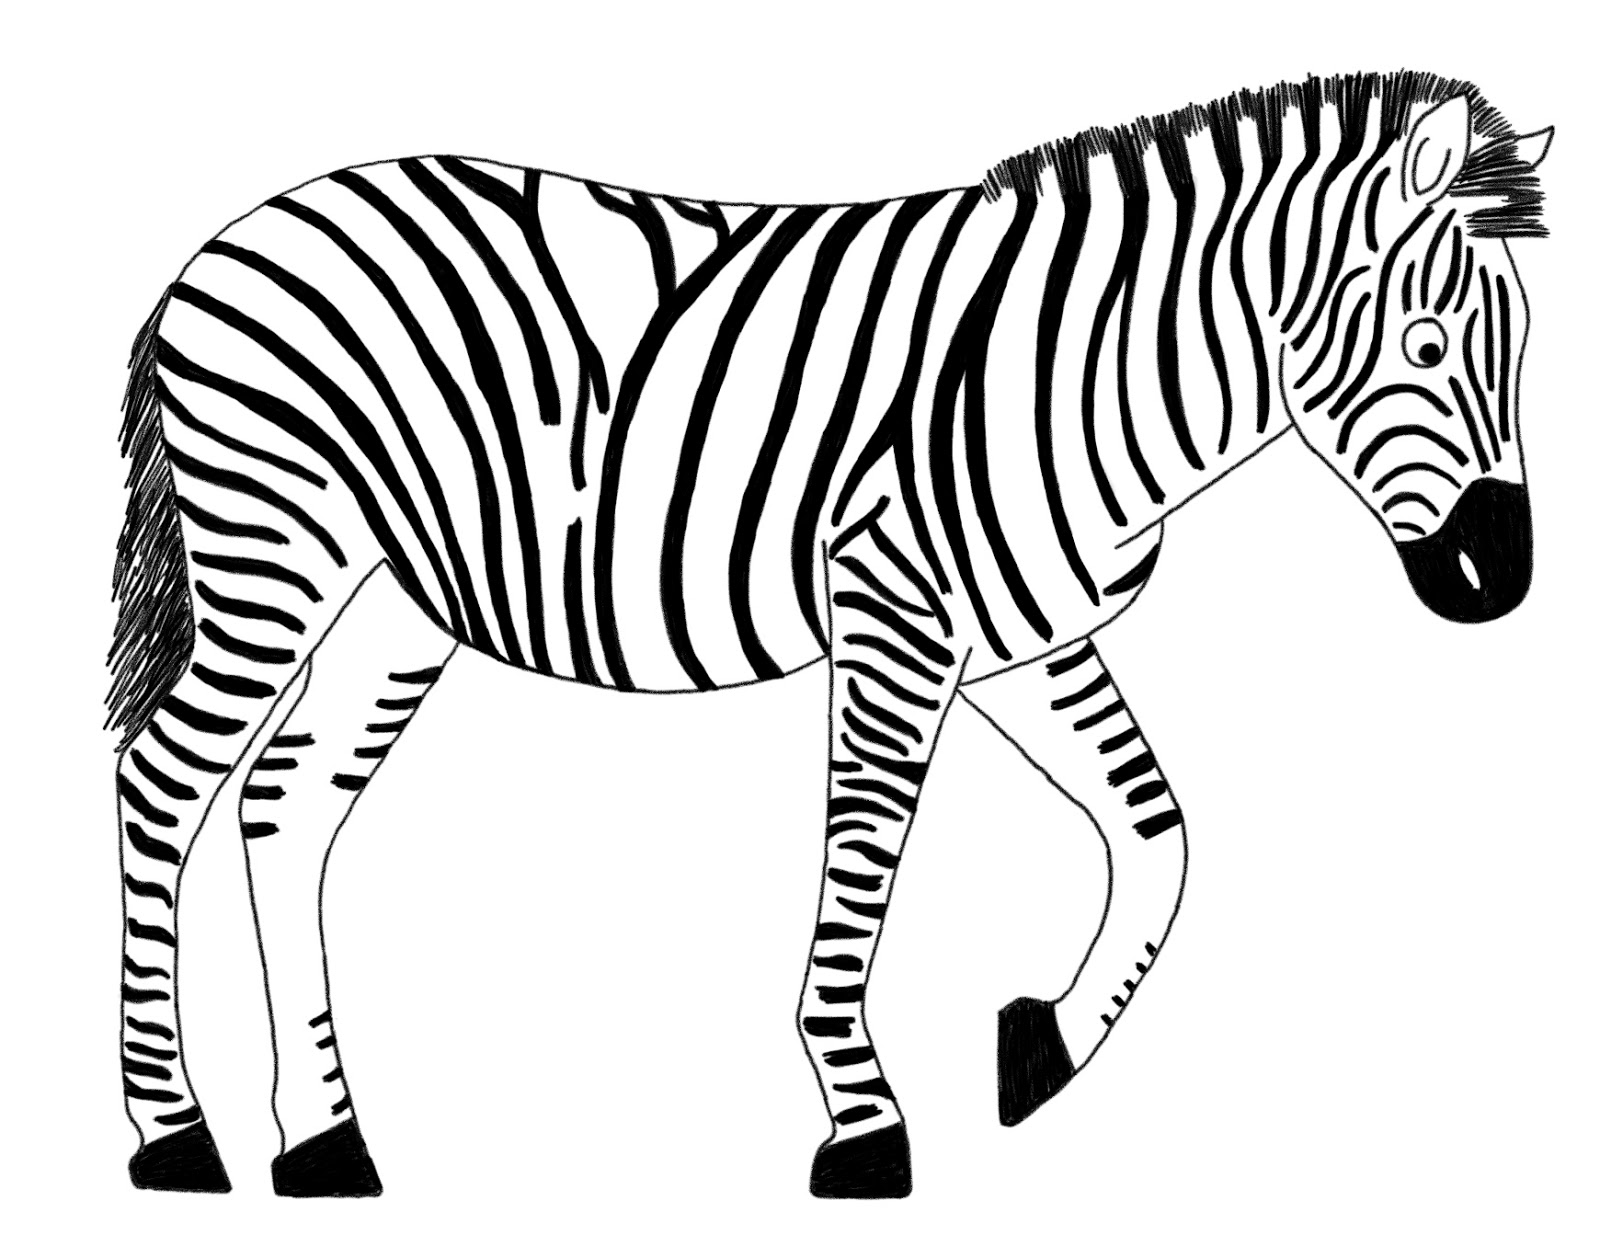 Zebra Line Drawing - ClipArt Best